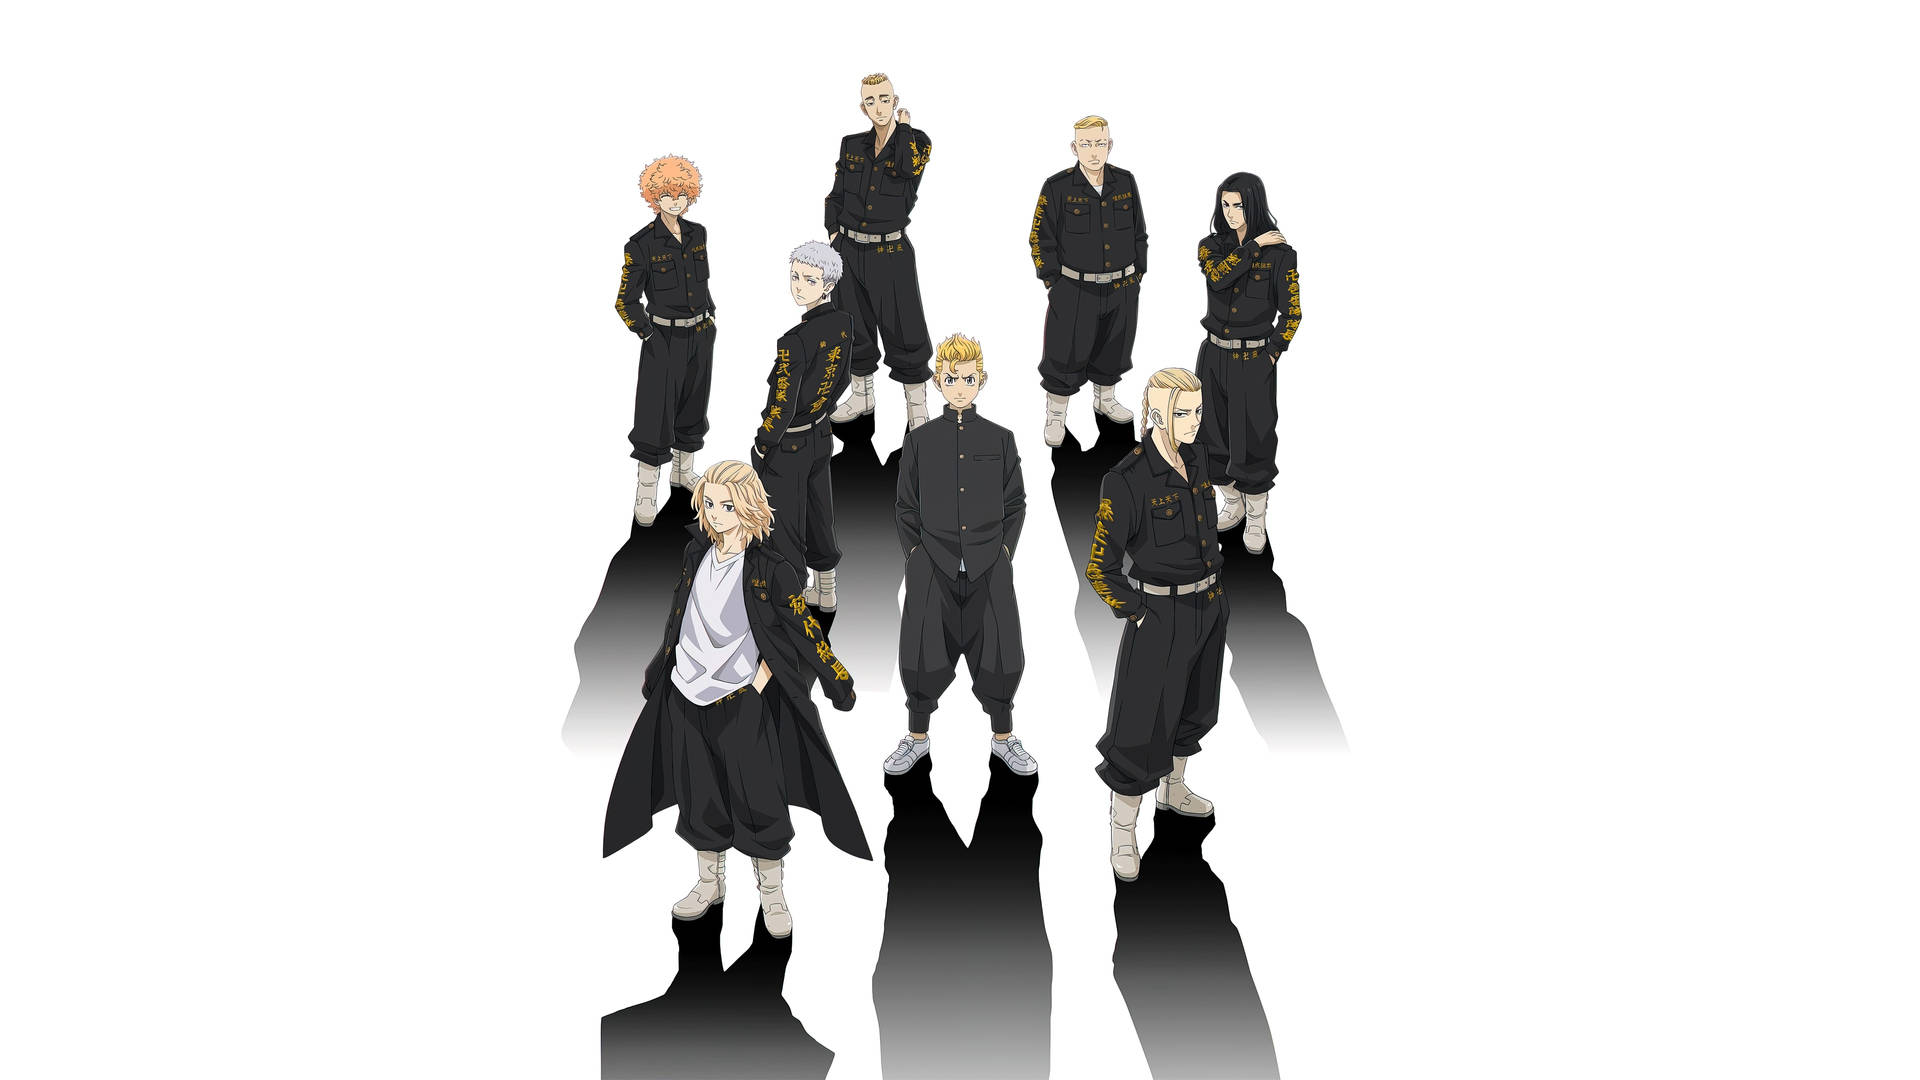 Posing Characters From Tokyo Revengers Manga Wallpaper